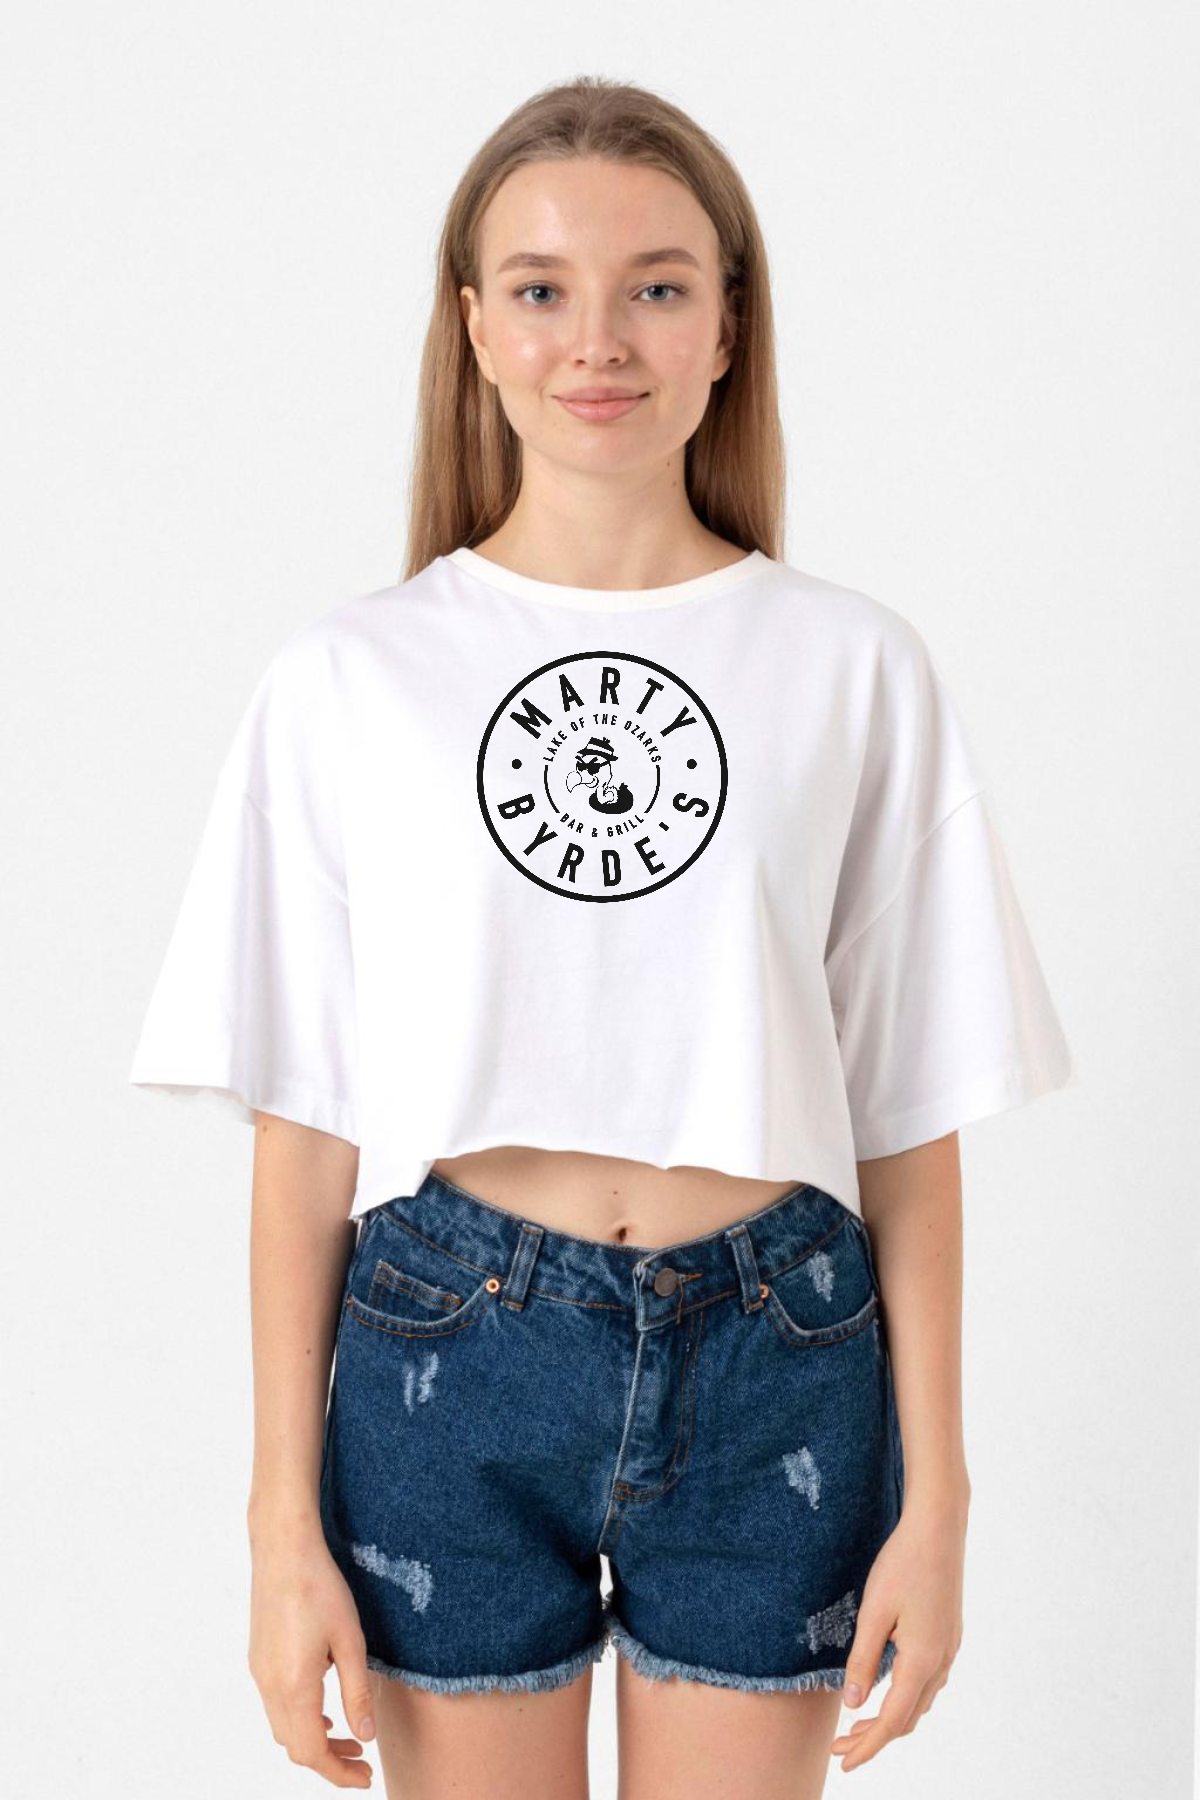 Ozark Marty Byrdes Logo Beyaz Kadın Crop Tshirt